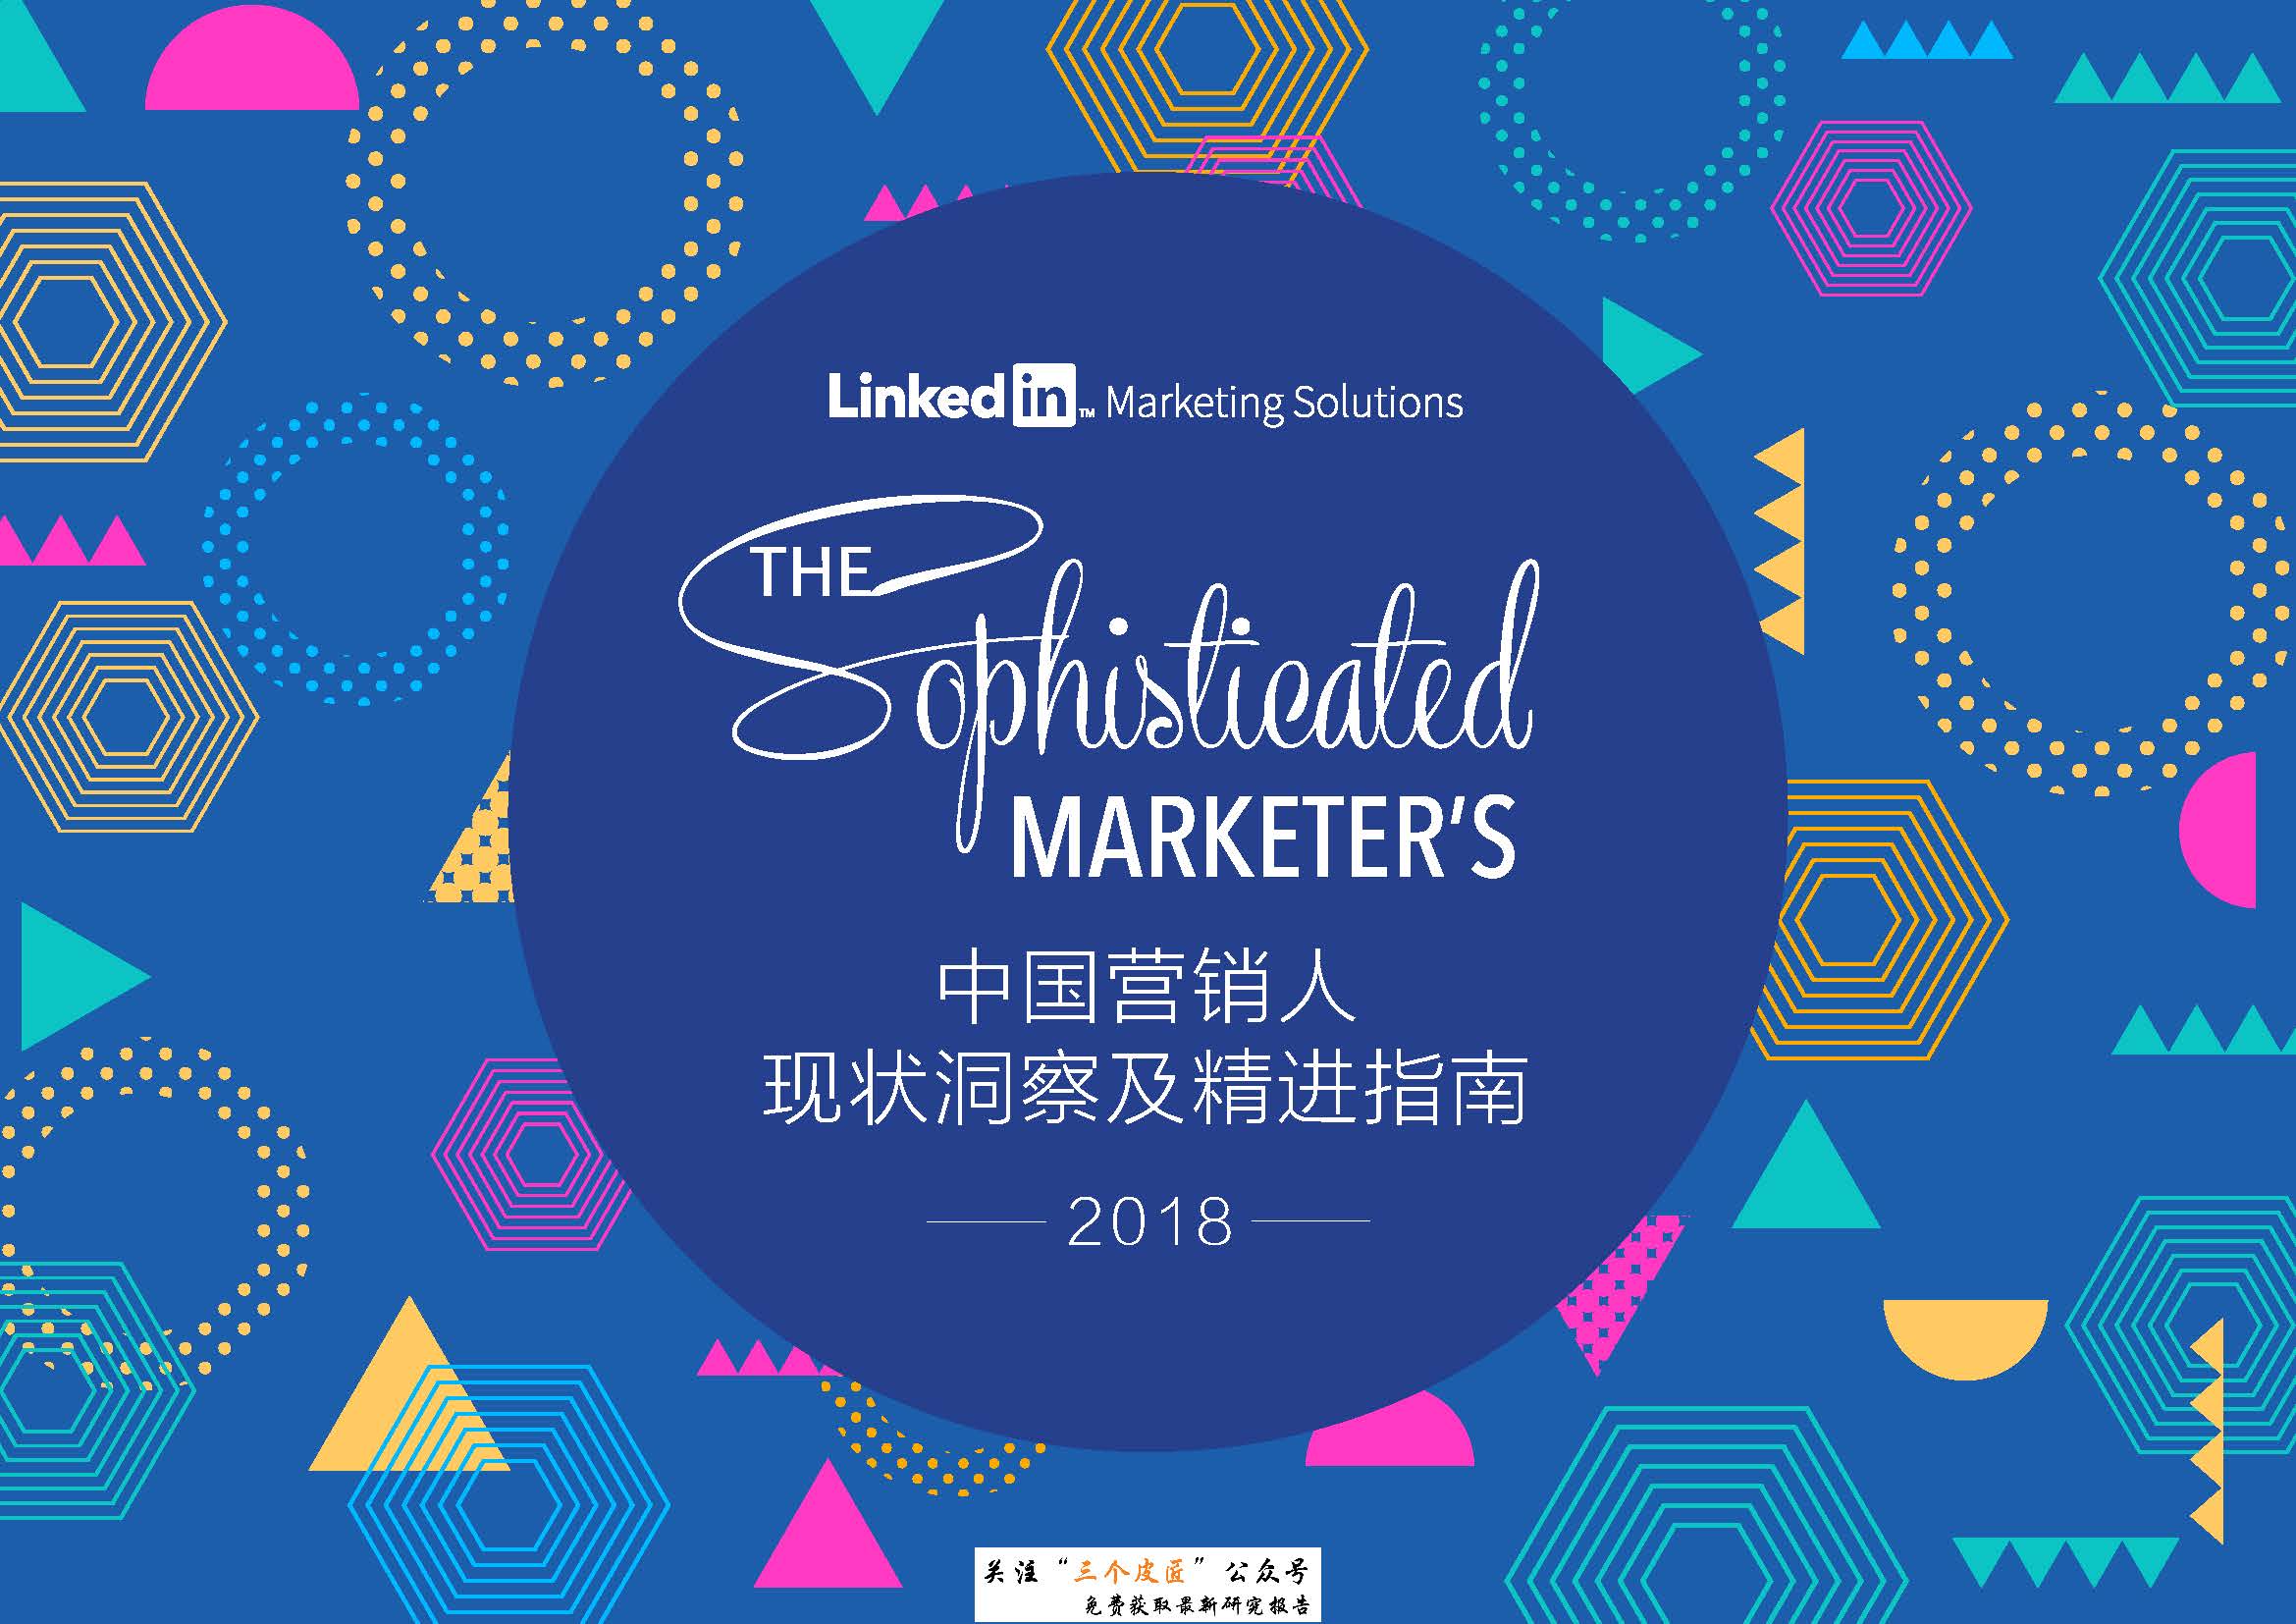 LinkedIn：2018中国营销人现状洞察及精进指南（附下载地址）